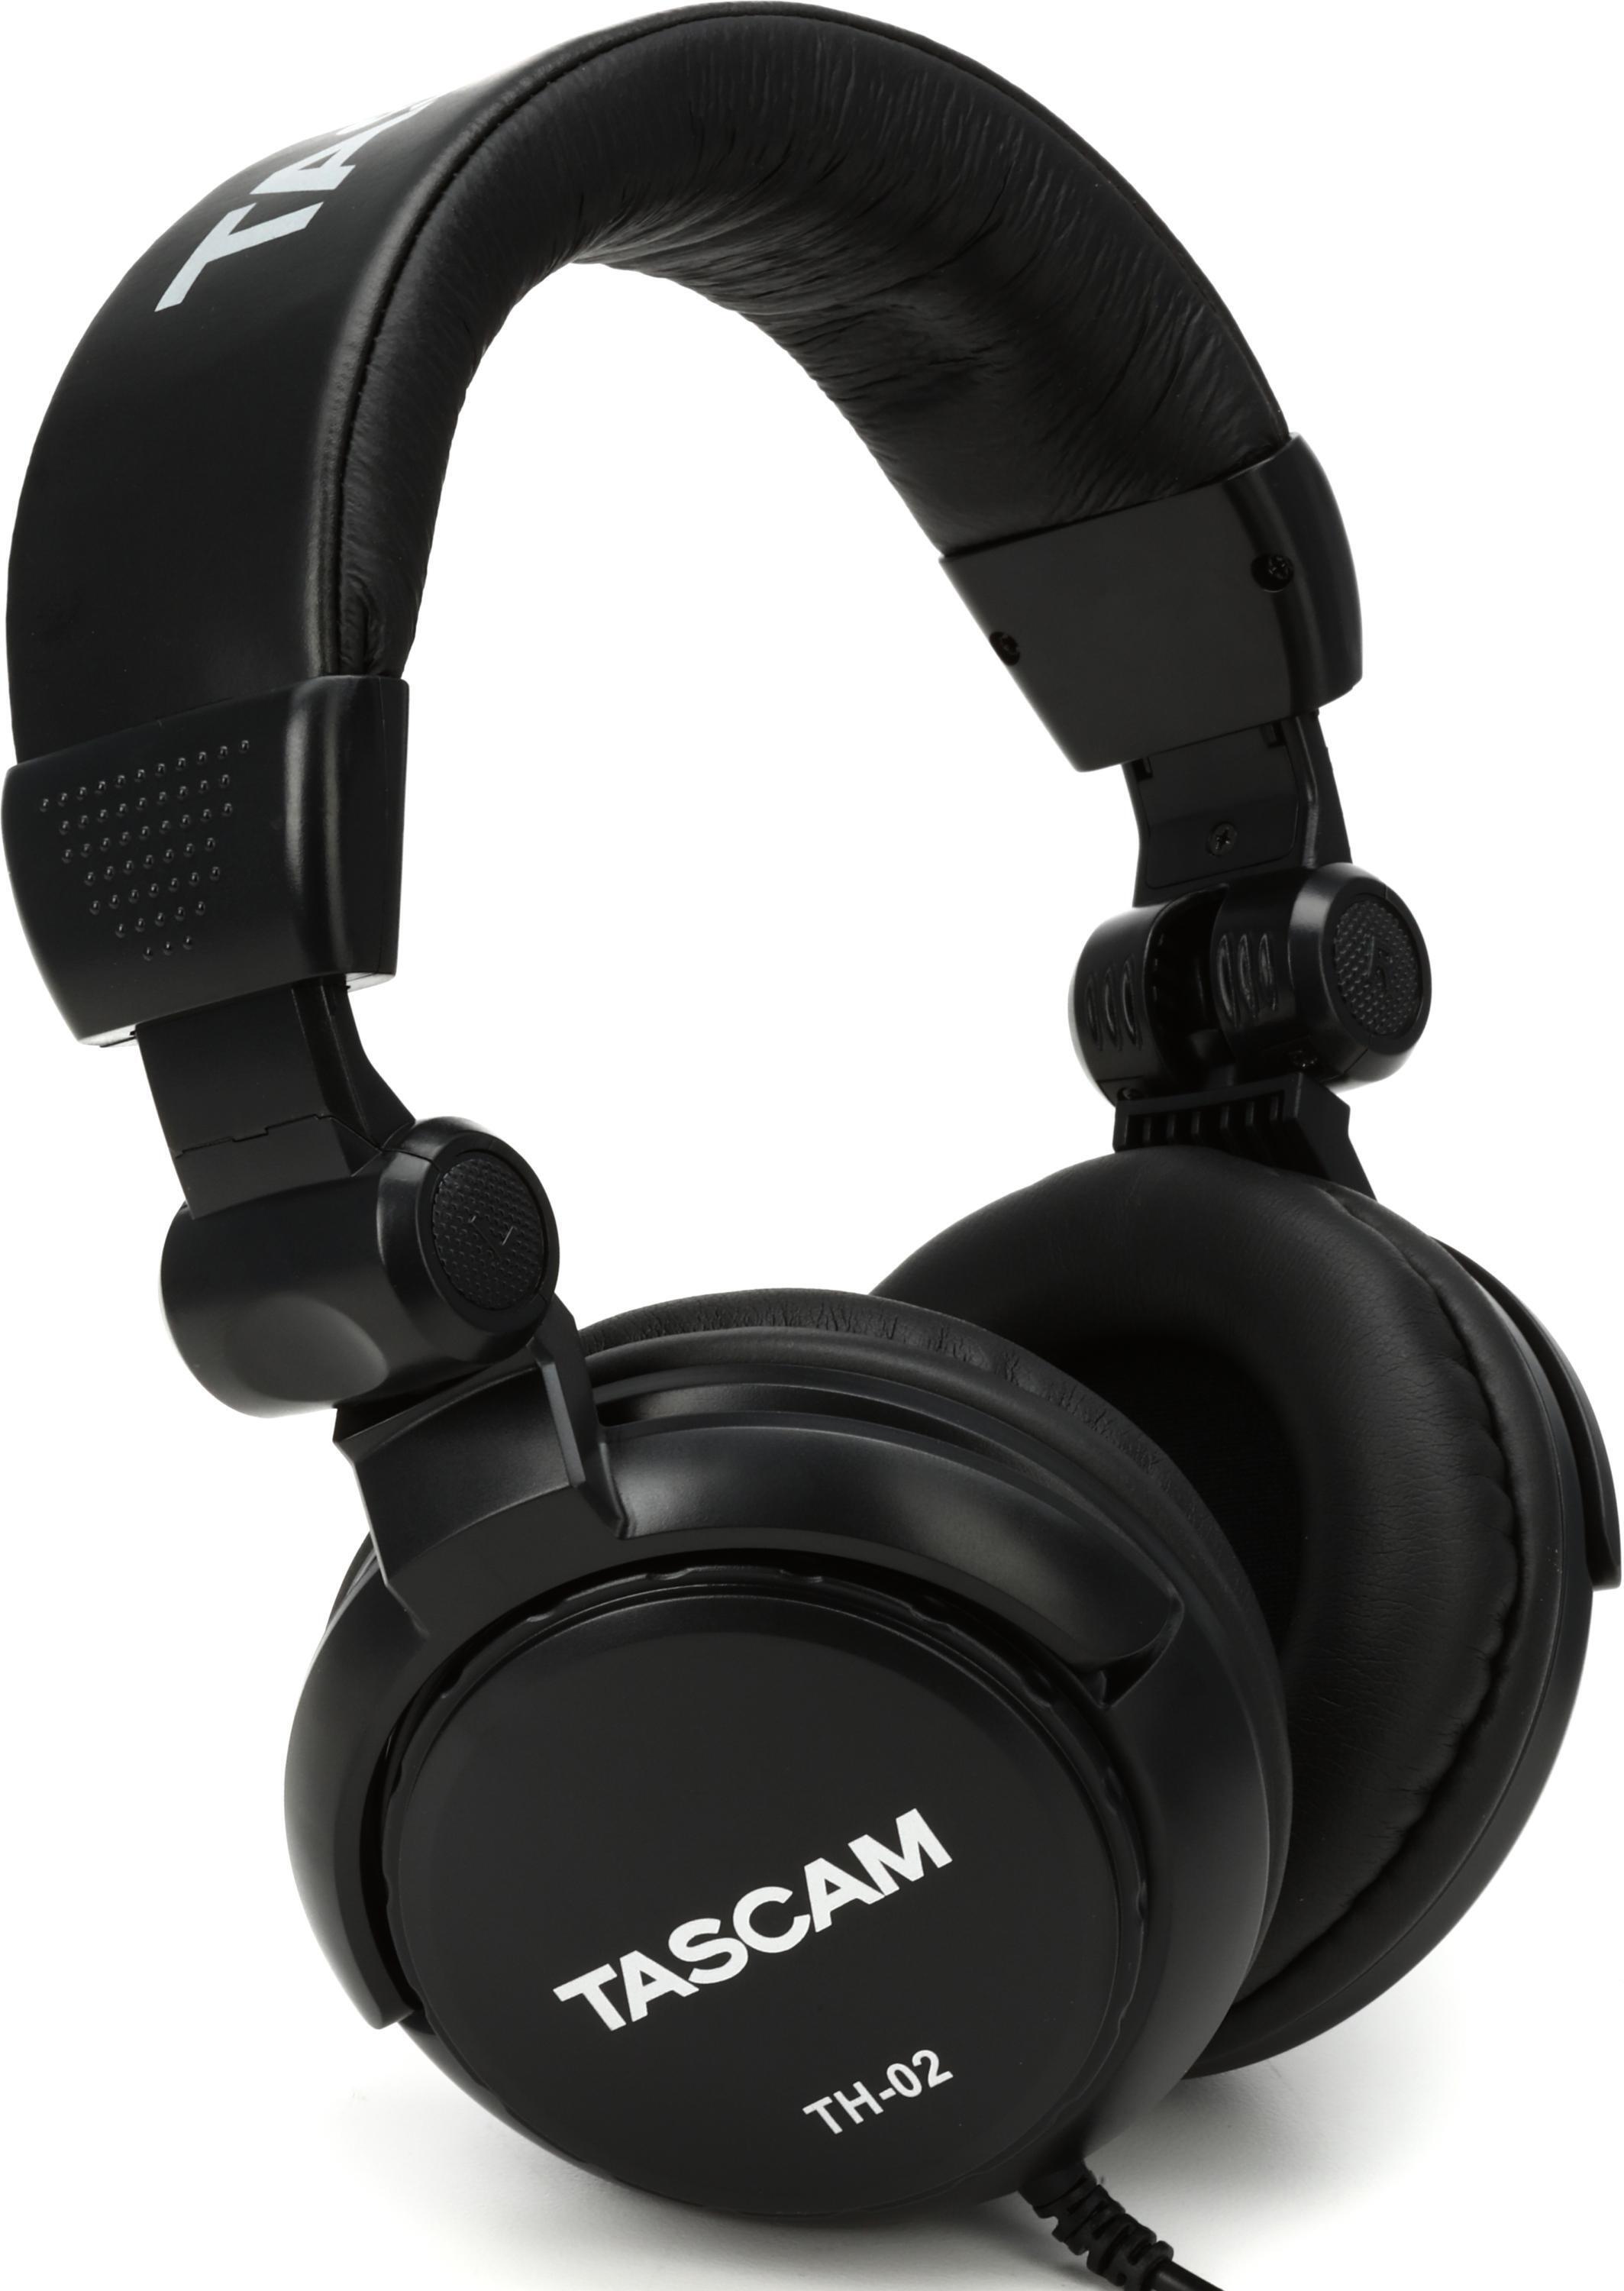 Bundled Item: TASCAM TH-02 Closed-back Studio Headphone - Black